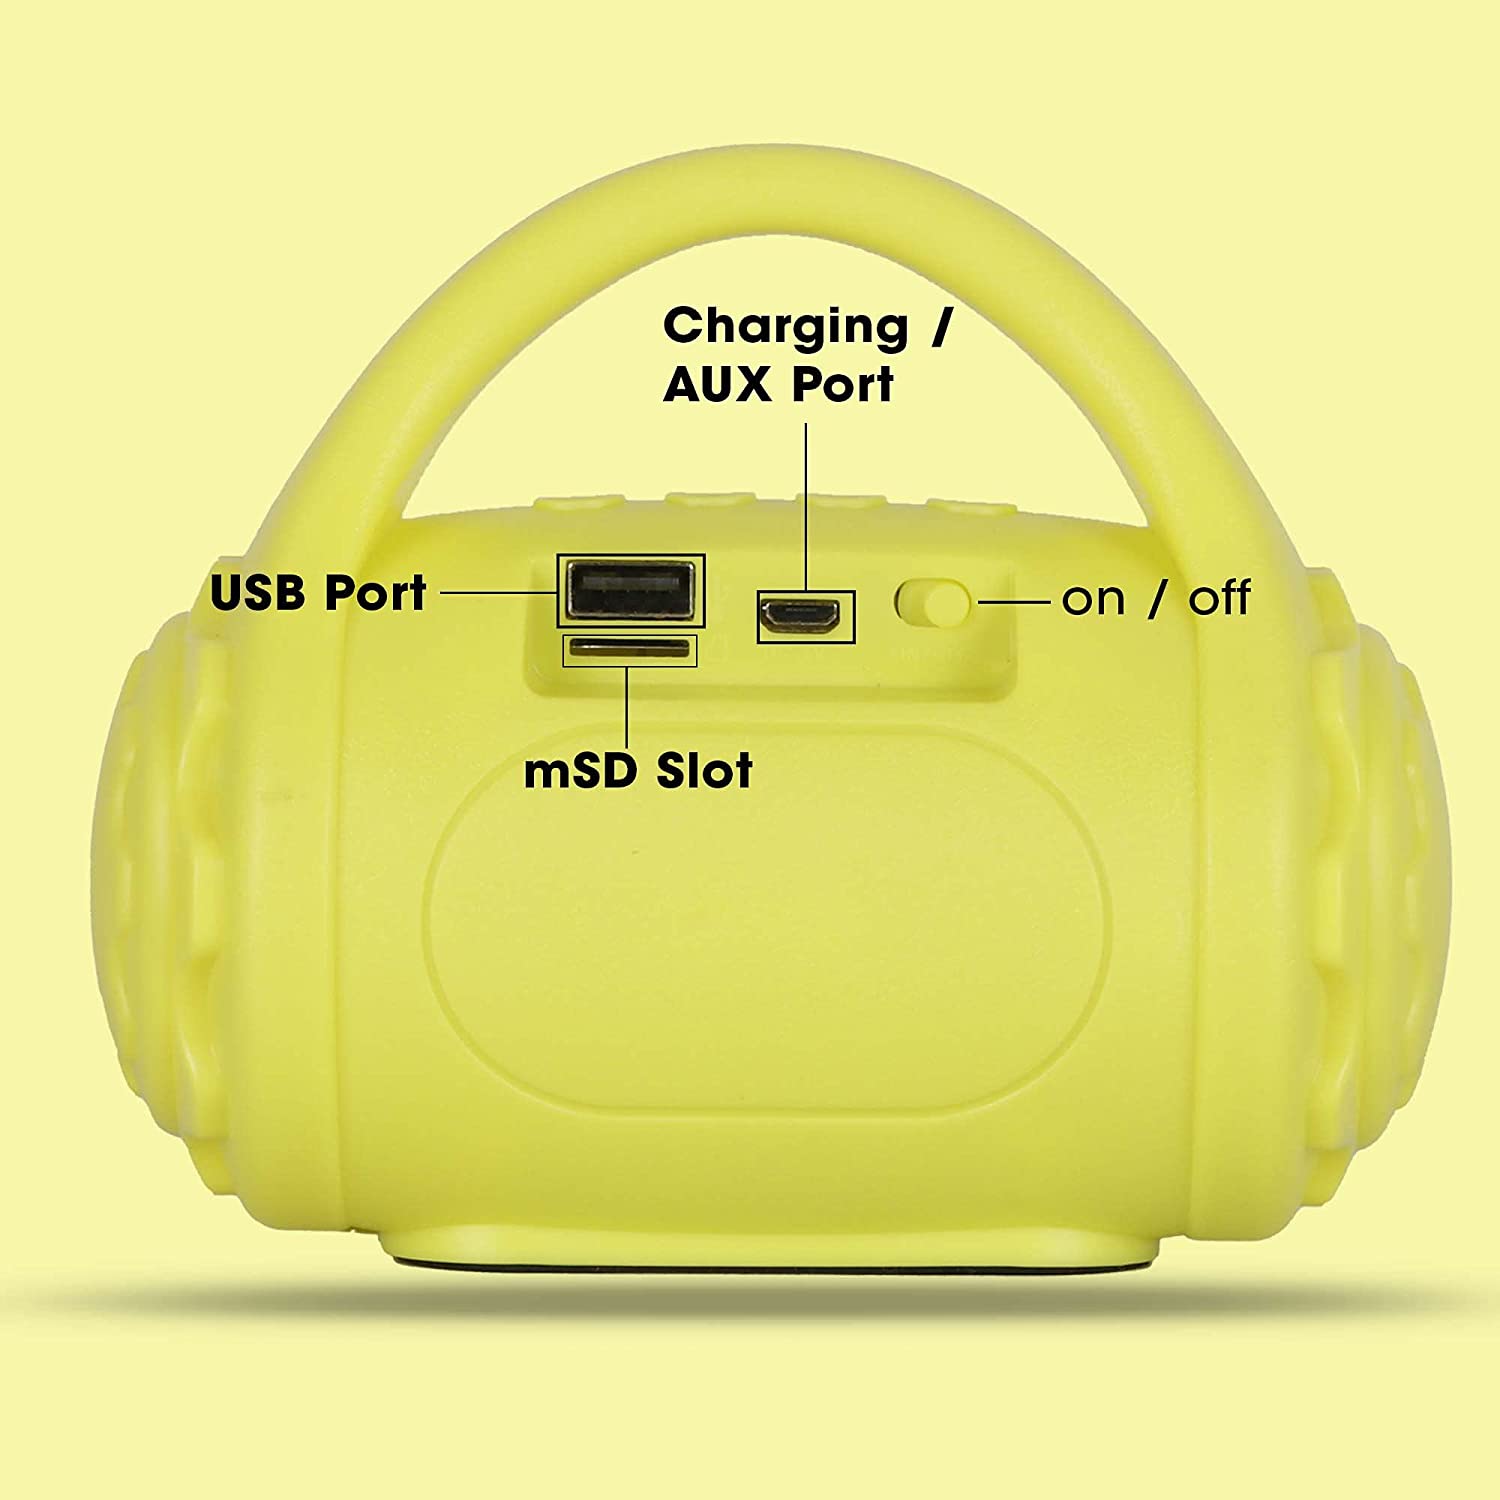 Zeb County (Neon Yellow) Bluetooth Speaker ZEBRONICS